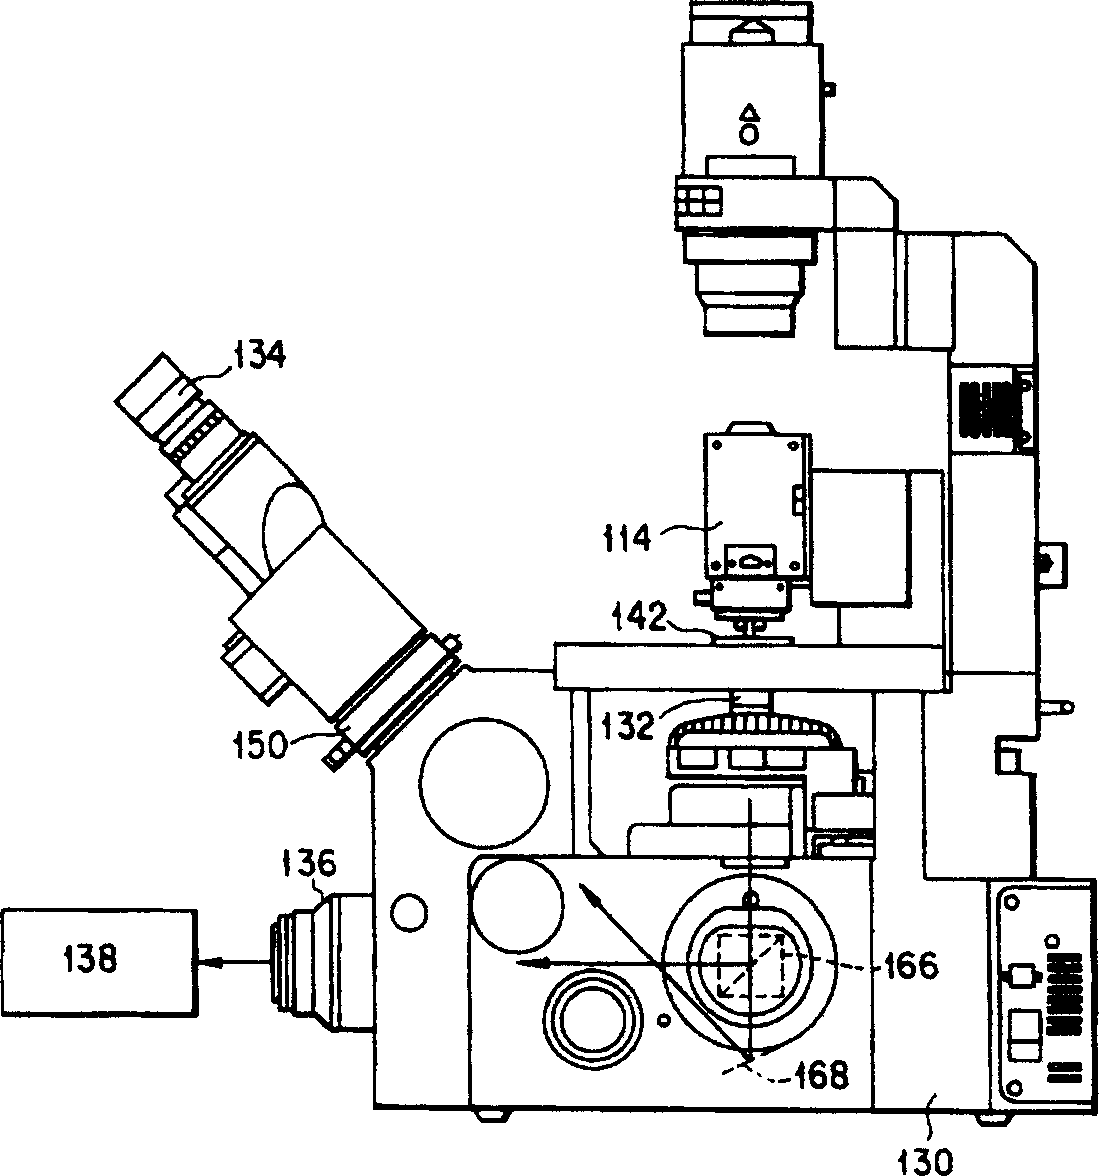 Modularized scanning probe microscope